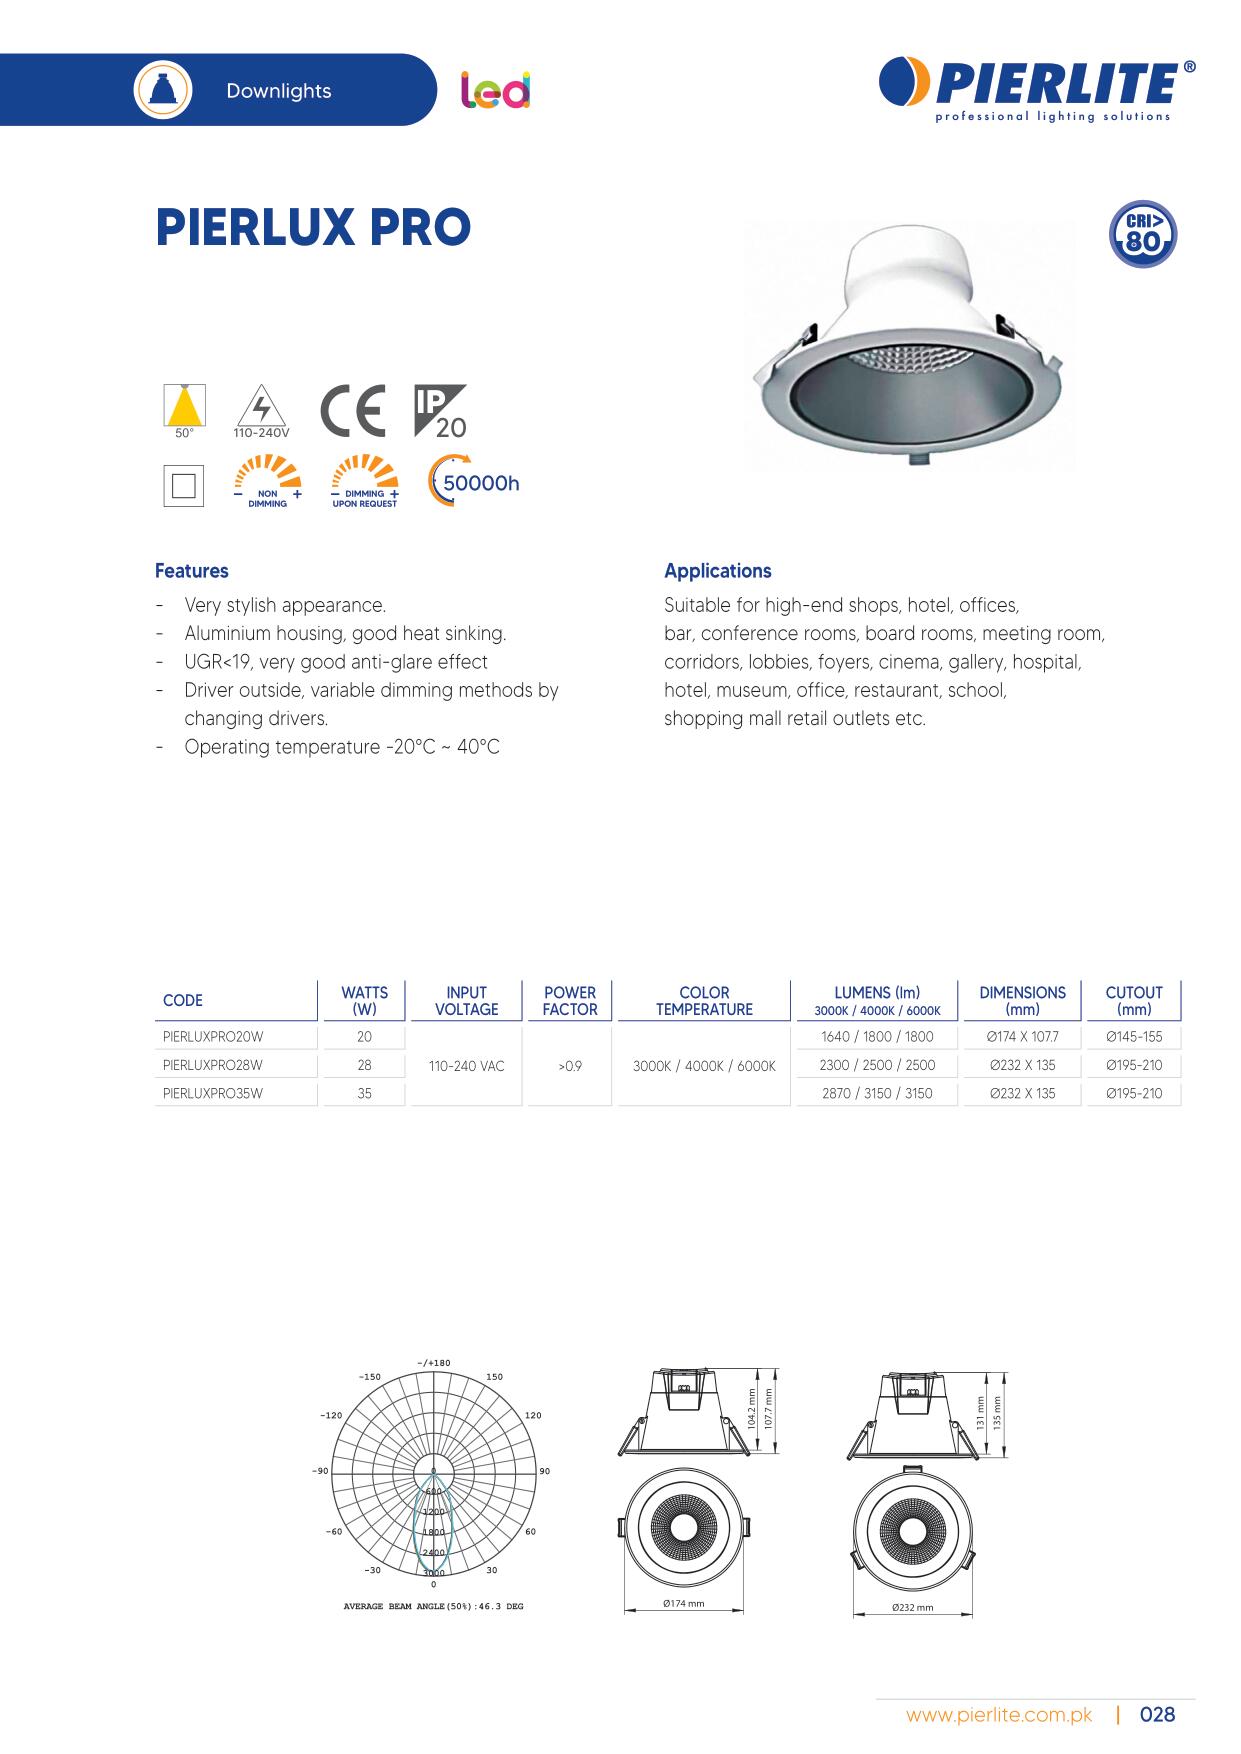 Pierlite LED Luminaire Catalog 2021-37